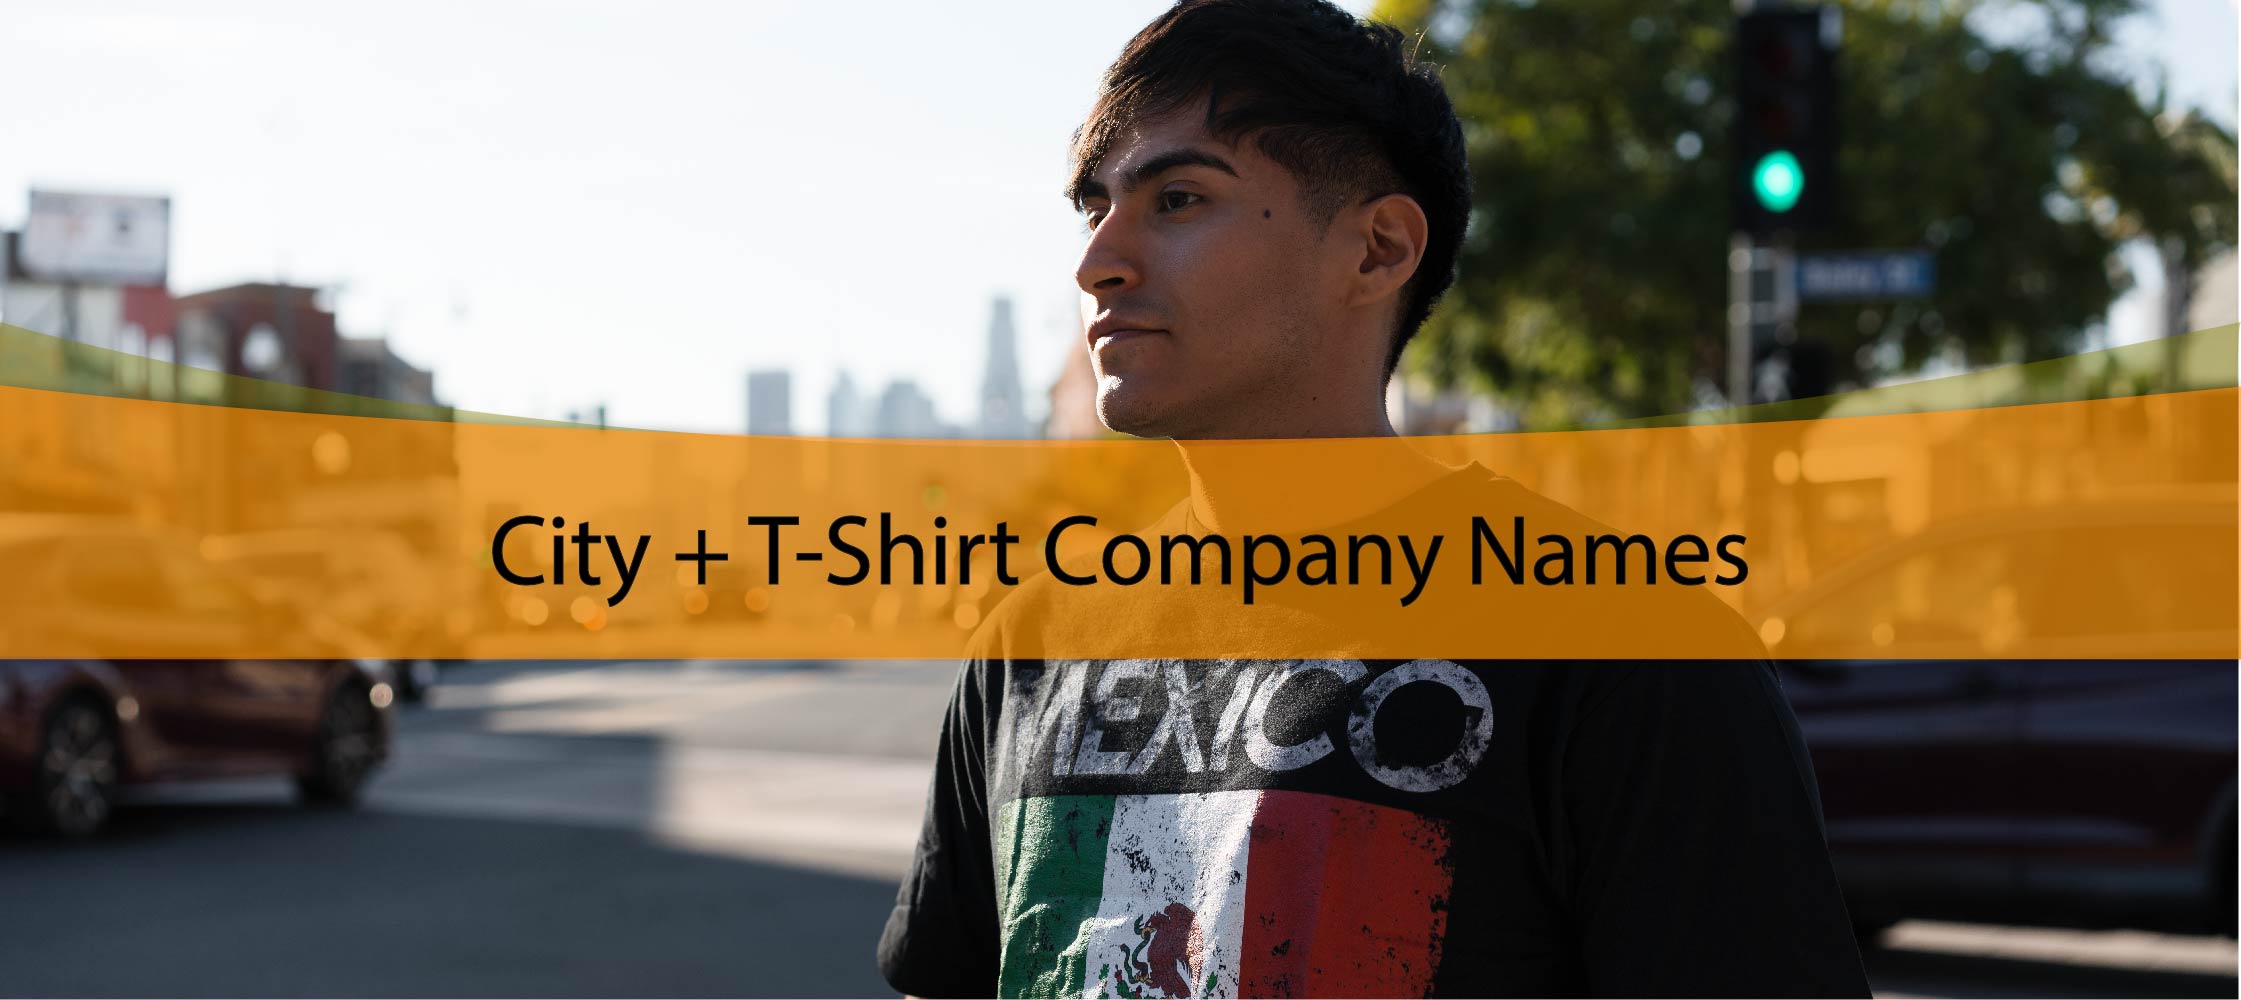 City + T-Shirt Company Names